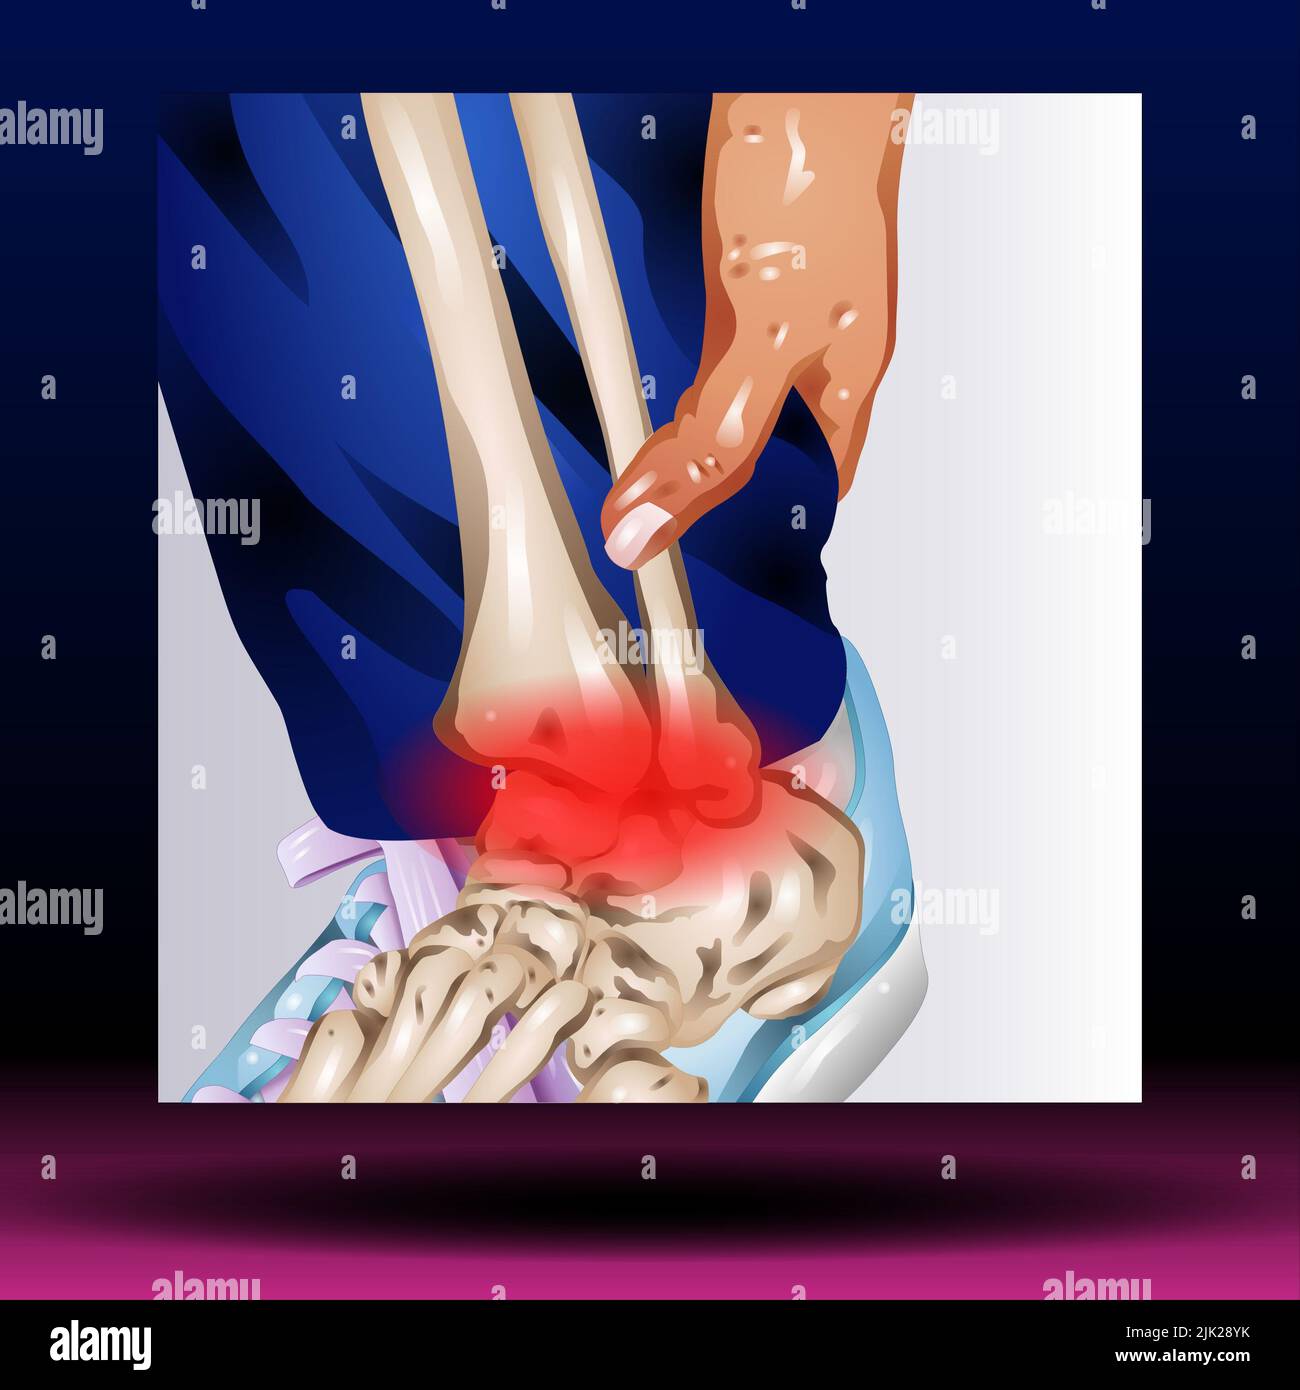 Anterior Longitudinal Ligament - Body Parts - Spine - Skeleton - Medical - Graphic - Joint Stock Photo